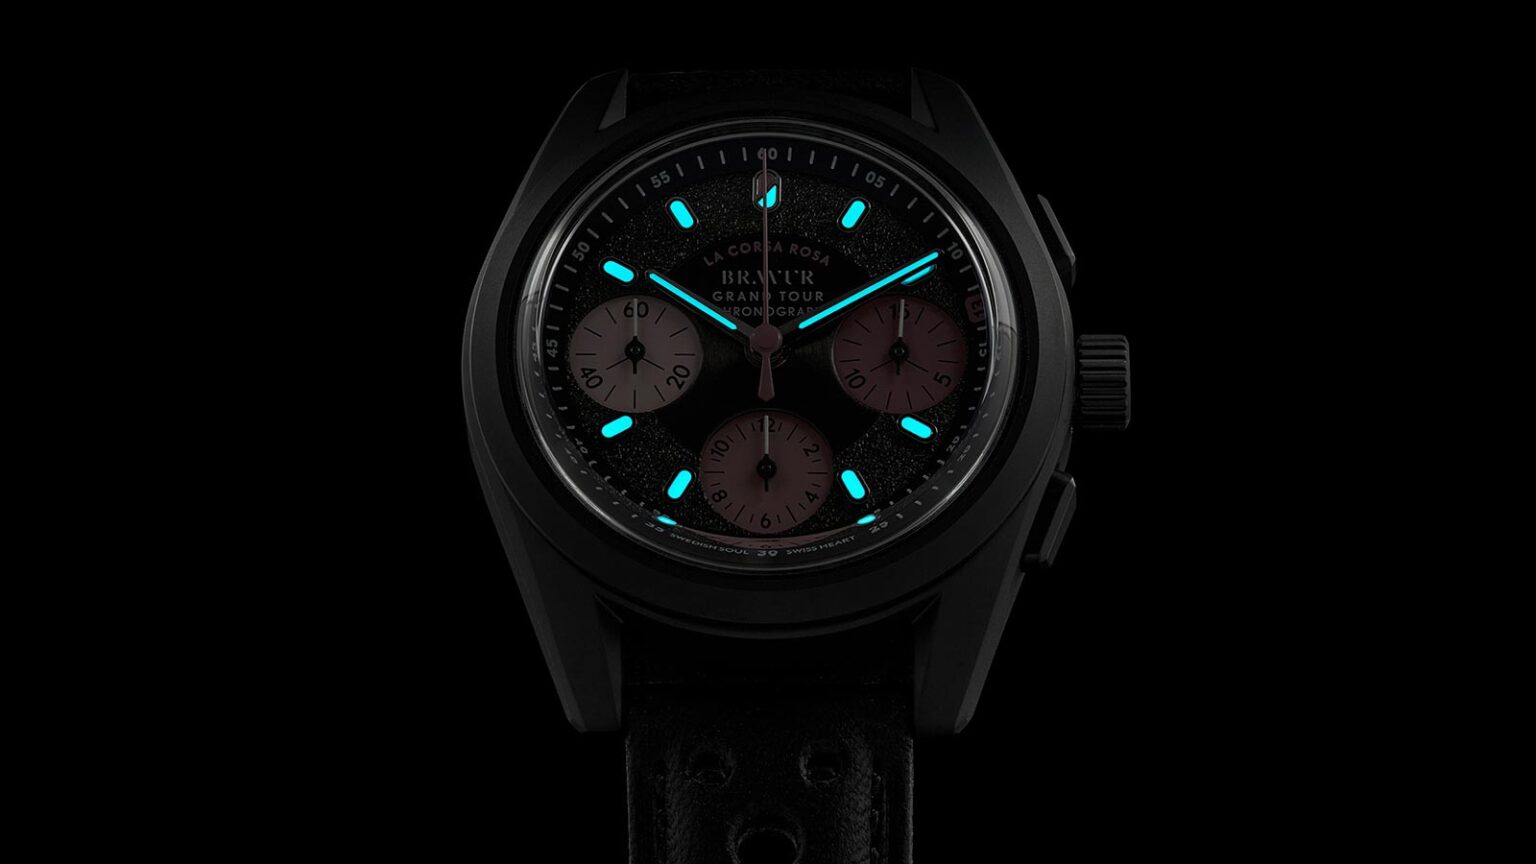 Bravur La Corsa Rosa IV luxury handmade mechanical chronograph watch celebrates Giro d'Italia, nighttime glow-in-the-dark mode